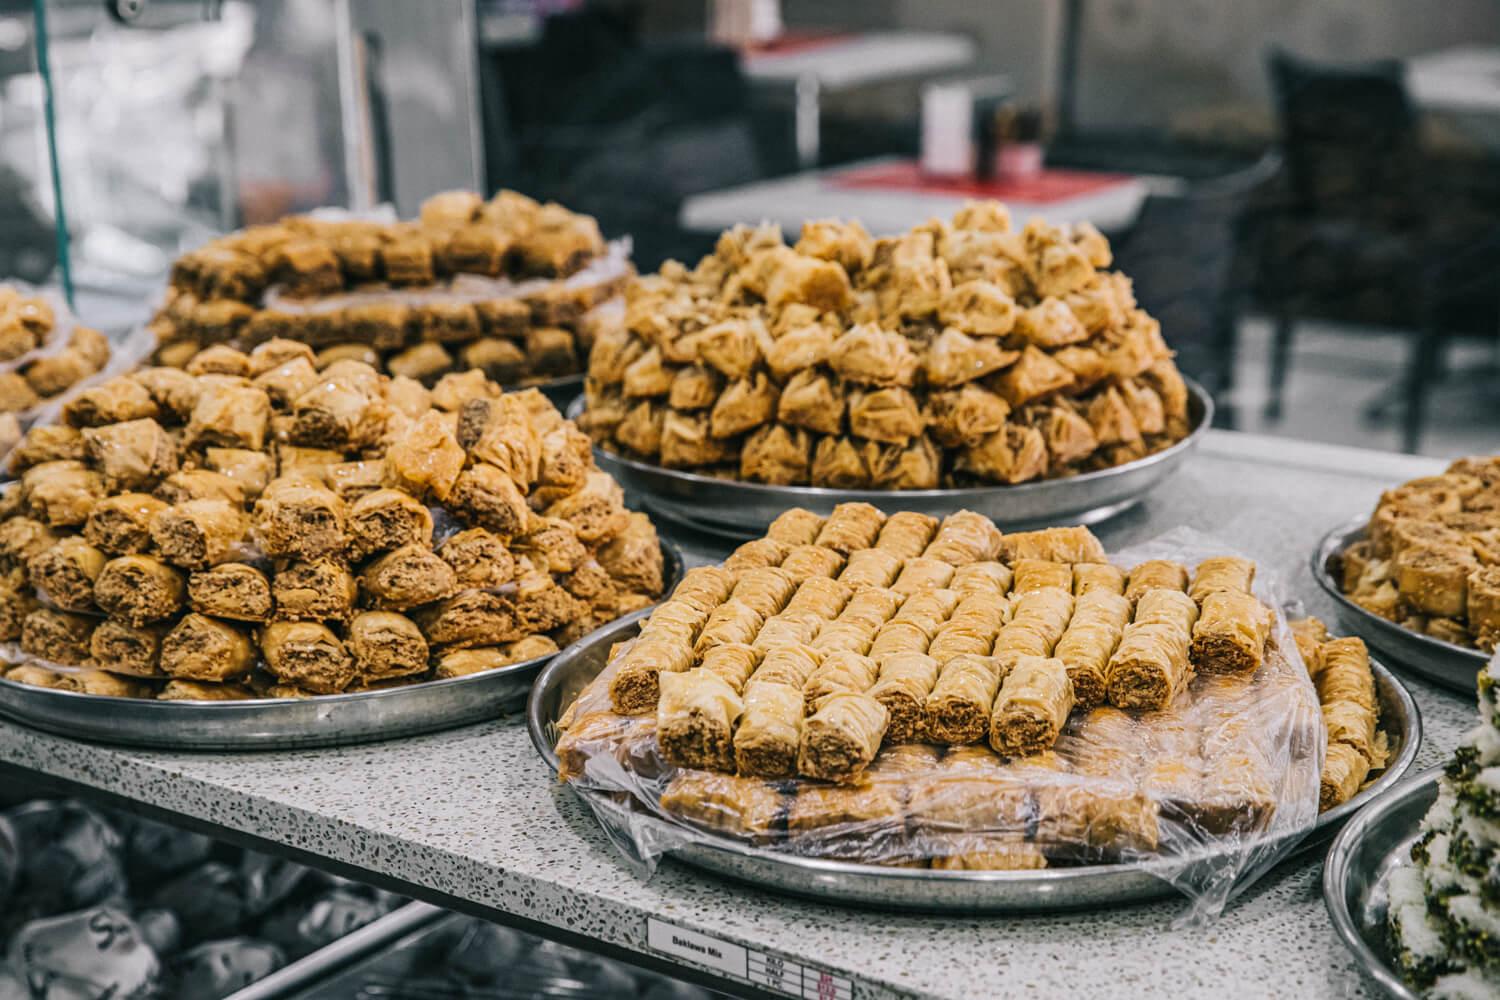 Lebanese Pastries on Display